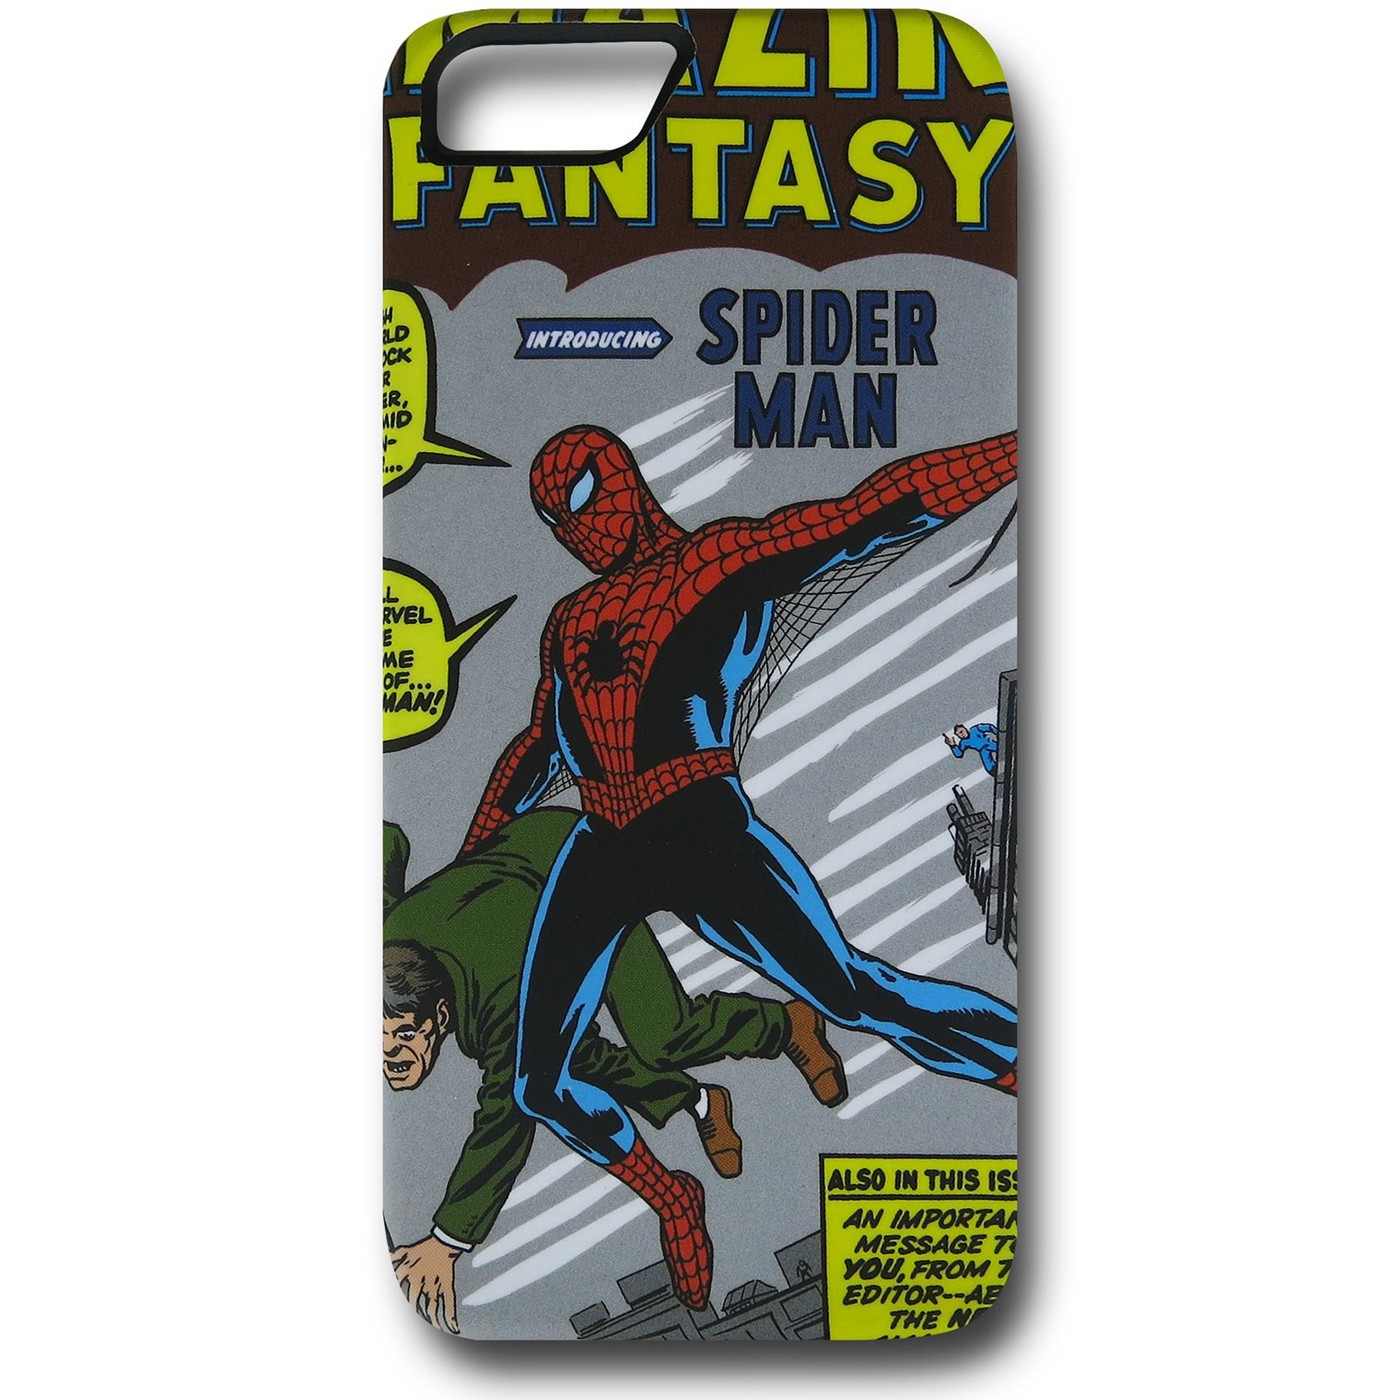 Spiderman Amazing Fantasy #15 iPhone 5 Case